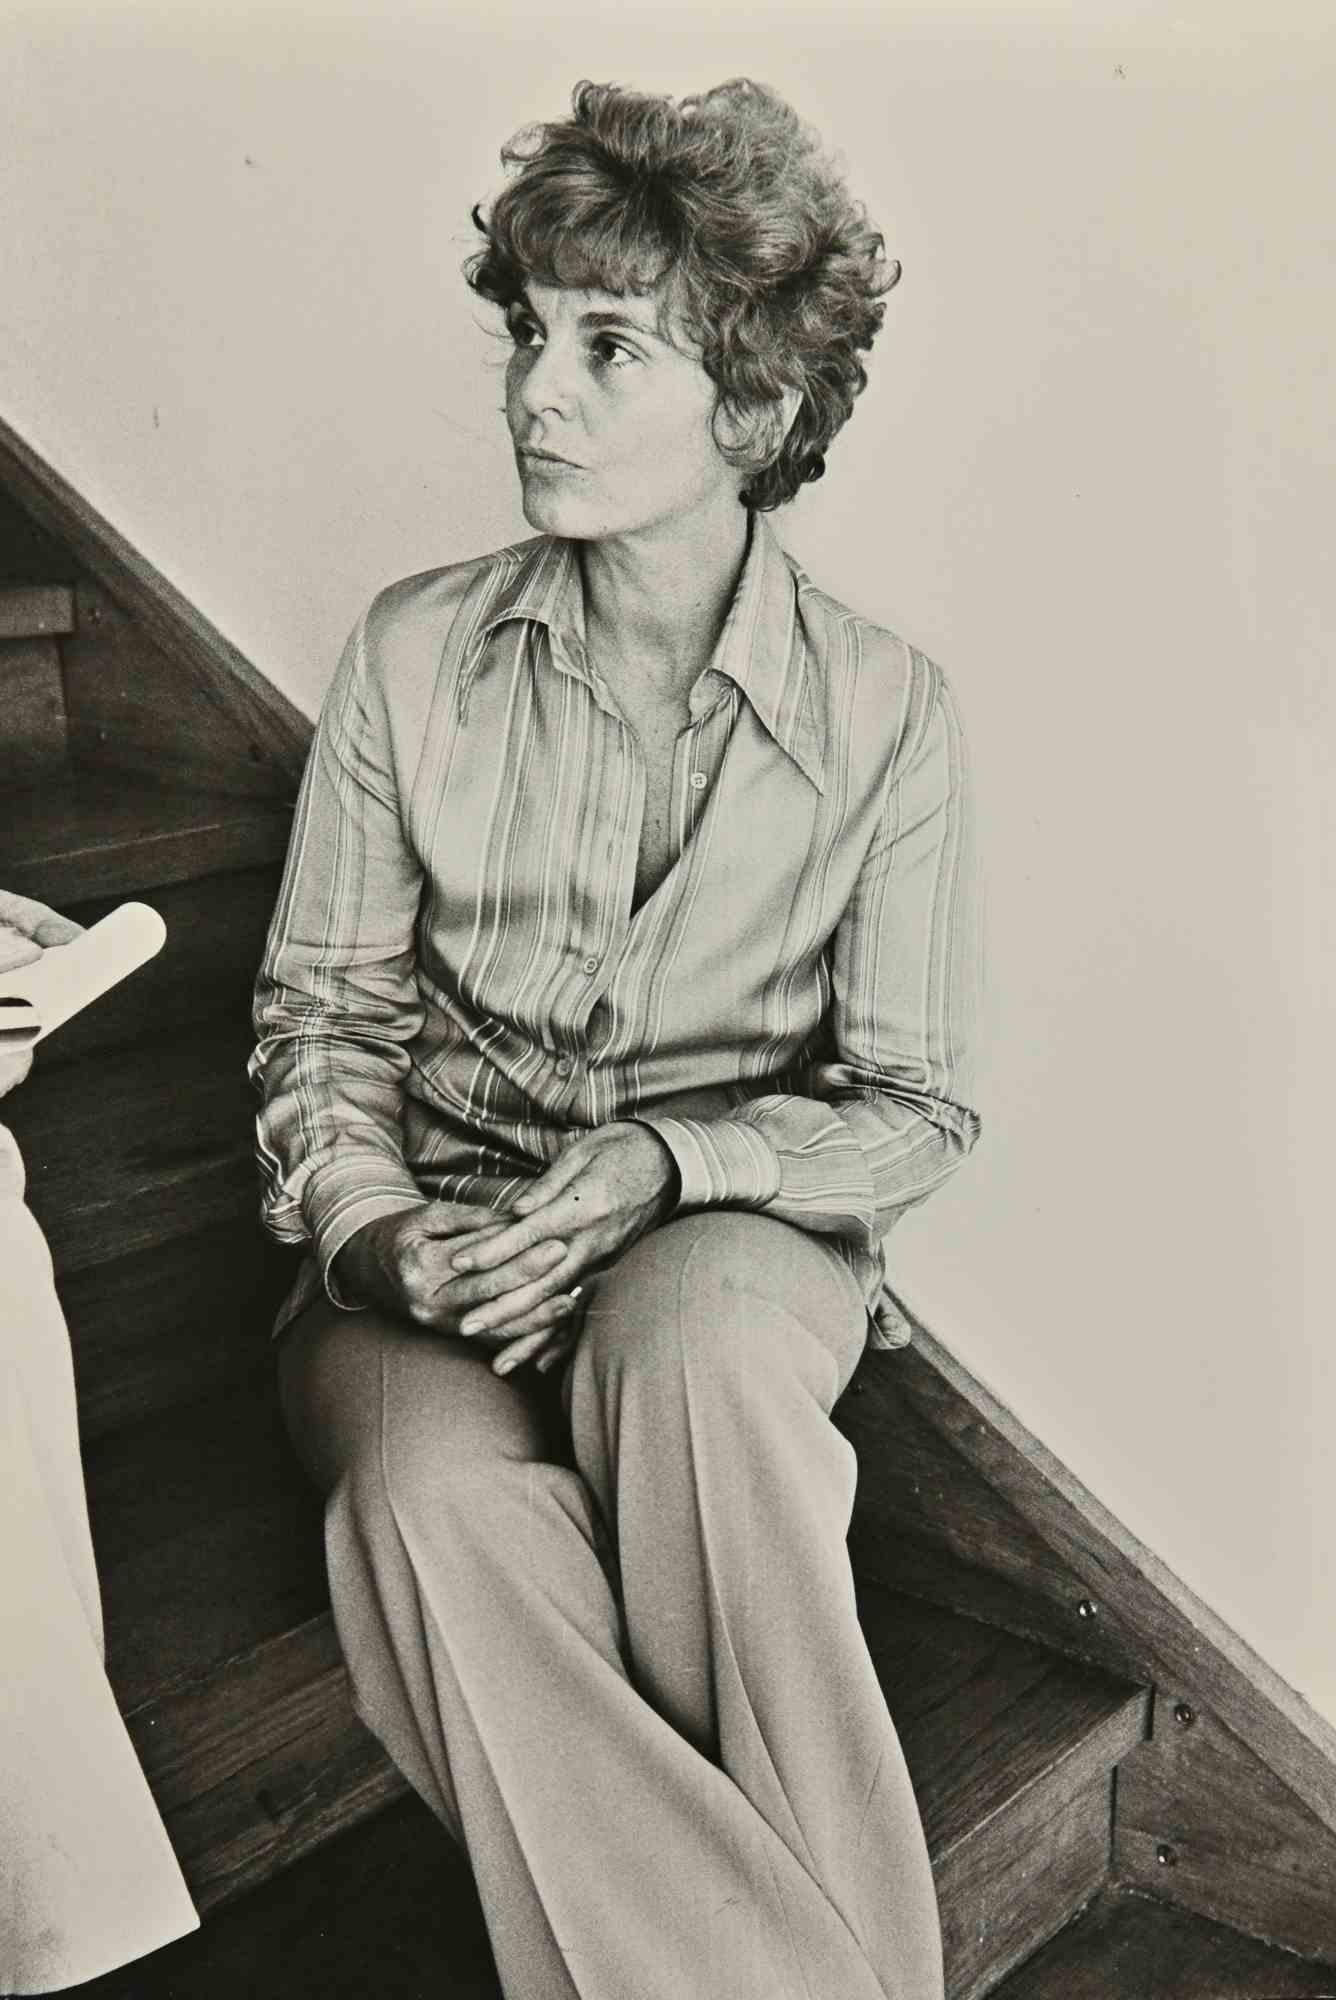 Gail Getty - Vintage Photograph - 1960s